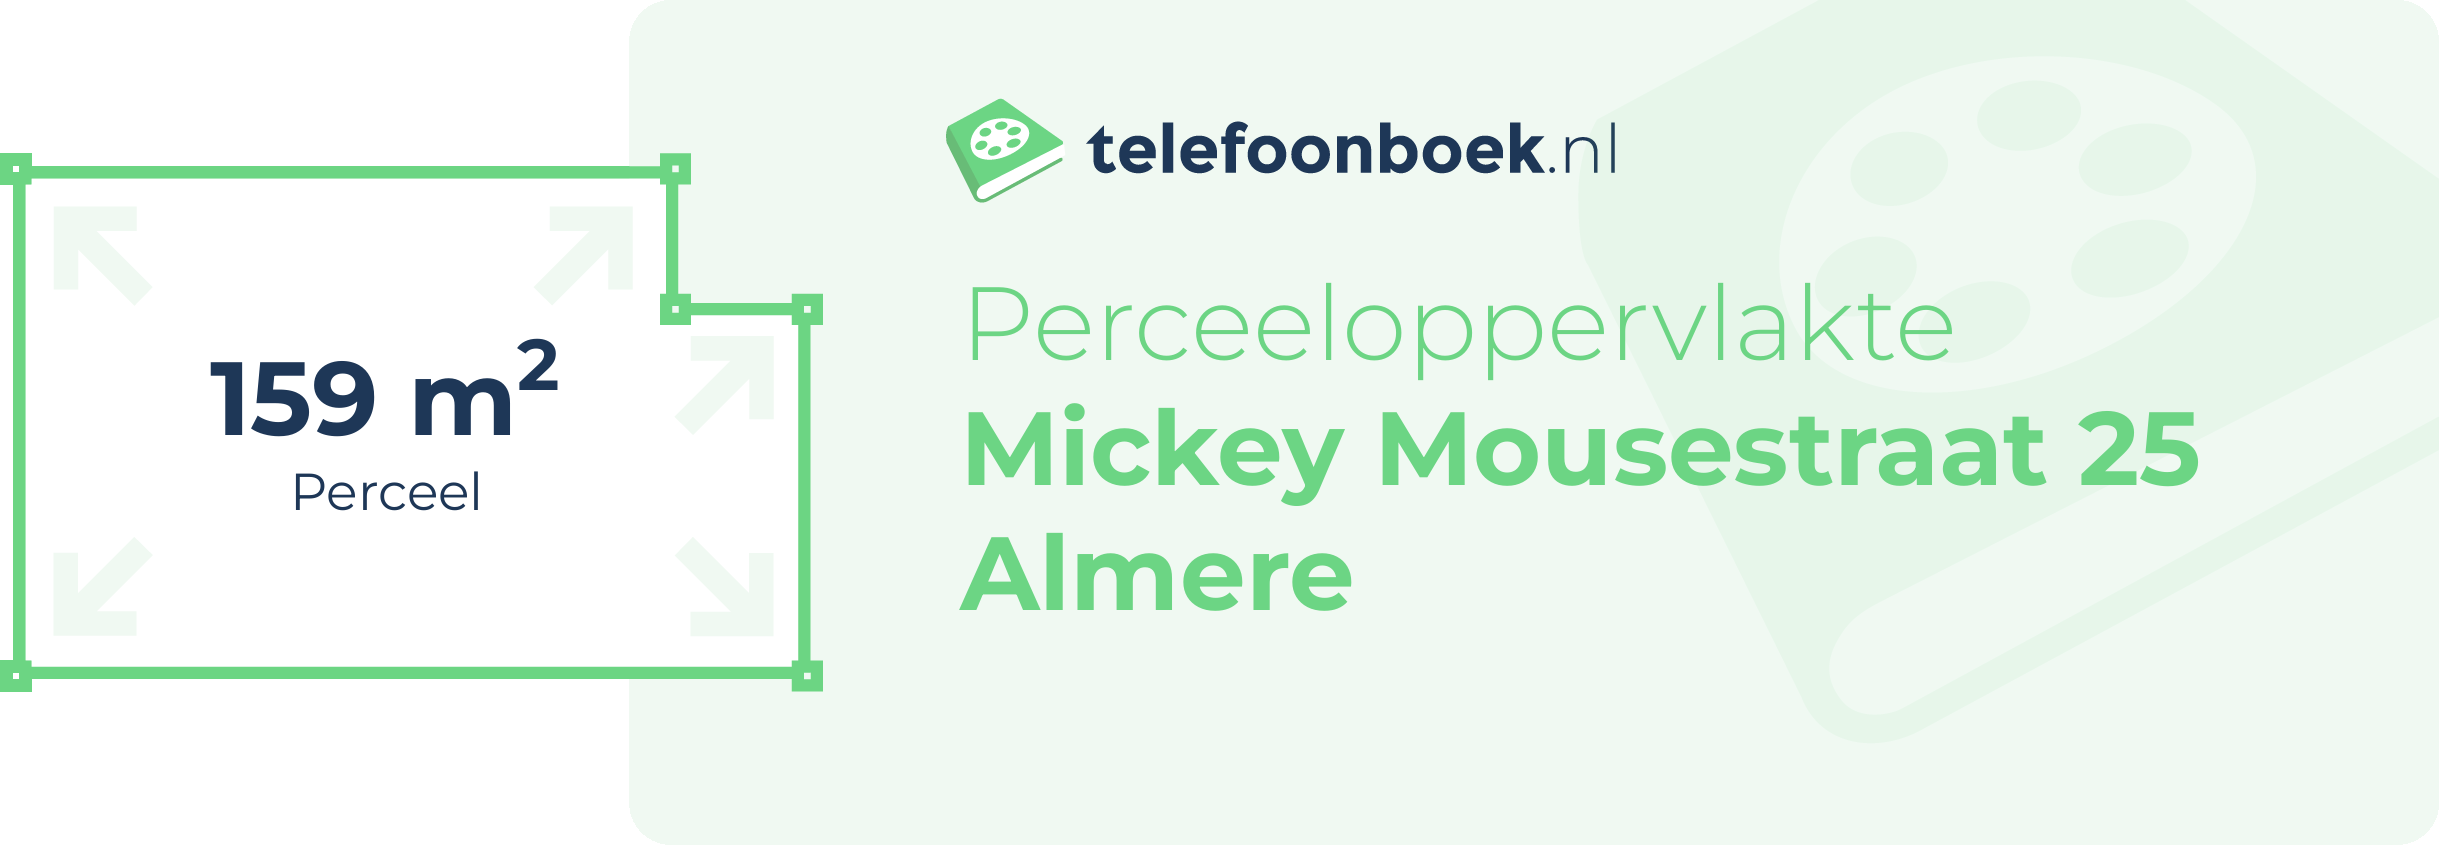 Perceeloppervlakte Mickey Mousestraat 25 Almere